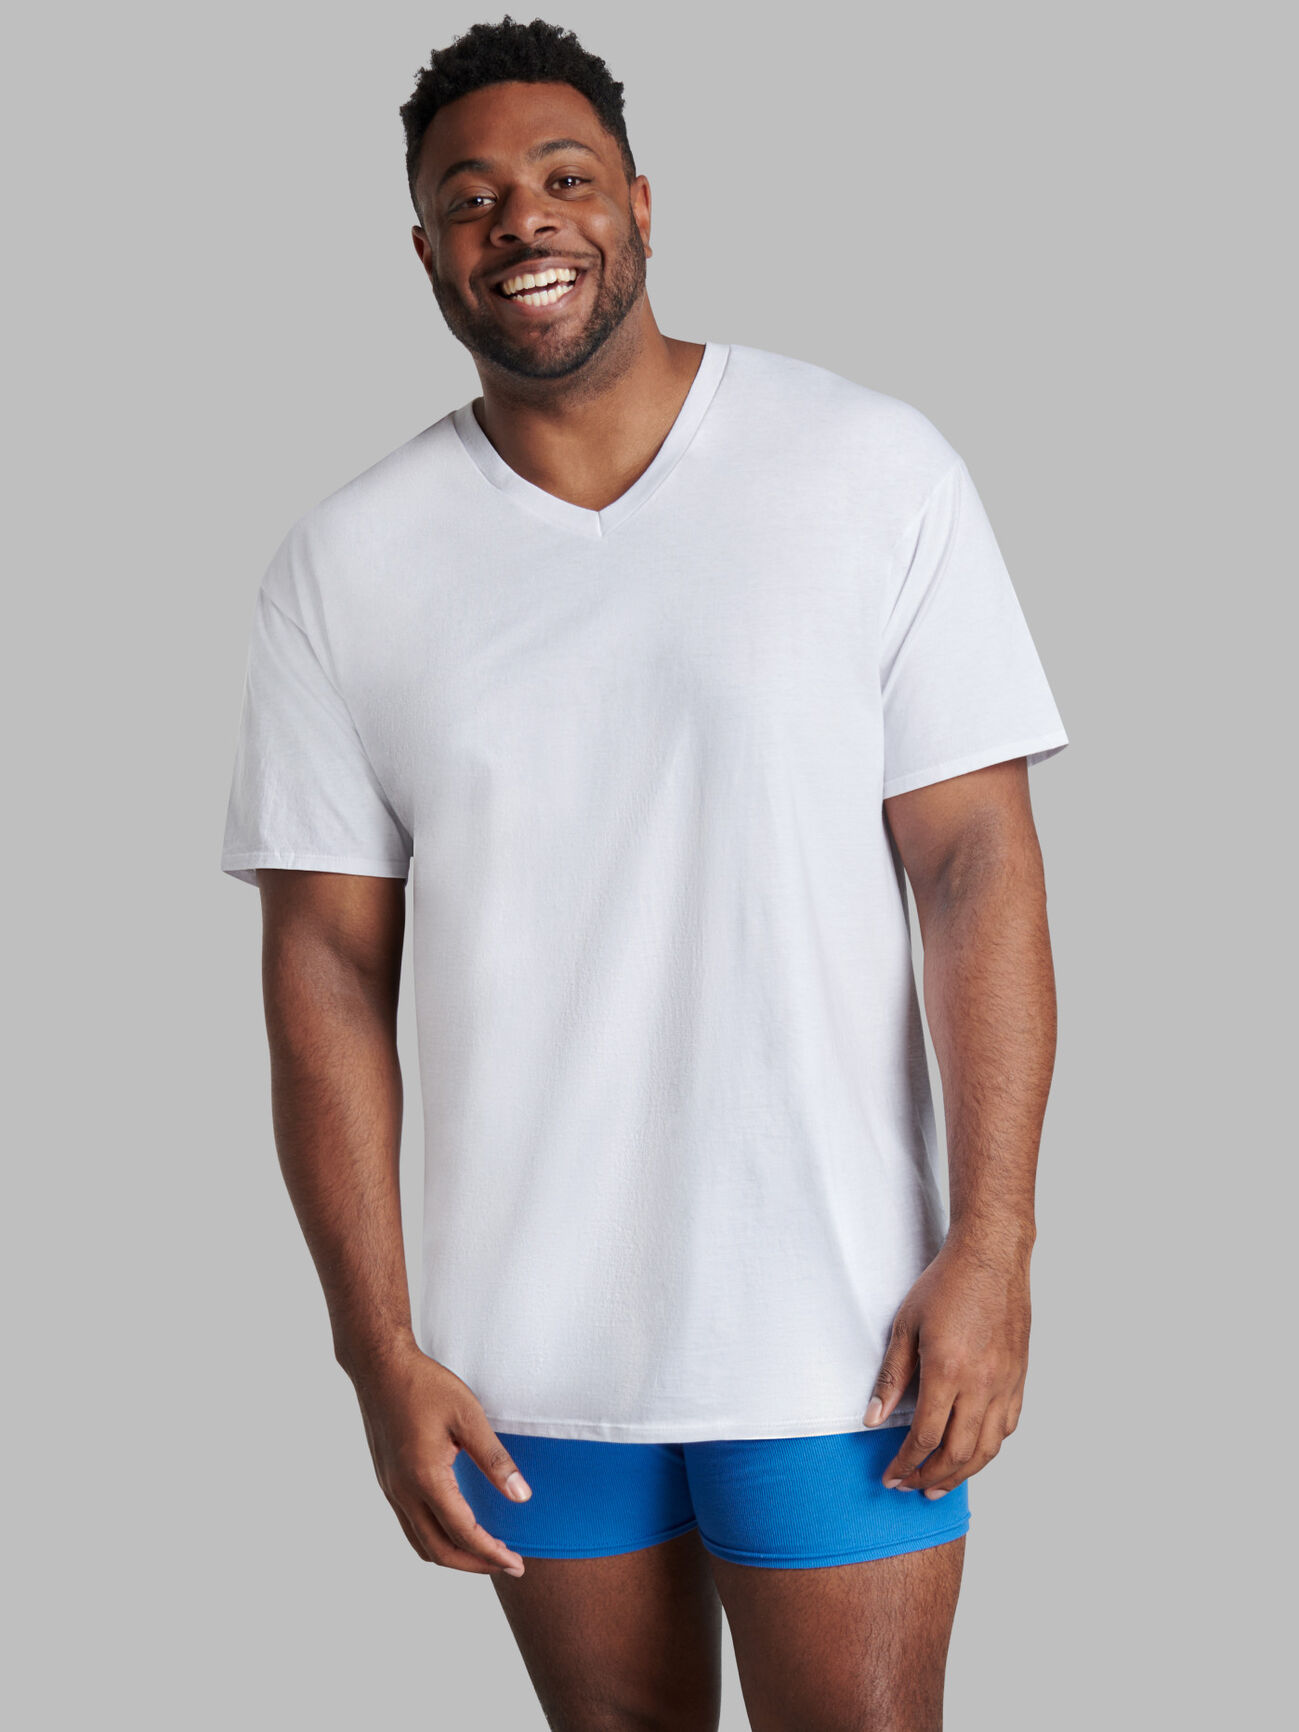 Tall Men's Classic White V-Neck T-Shirts, 6 Pack